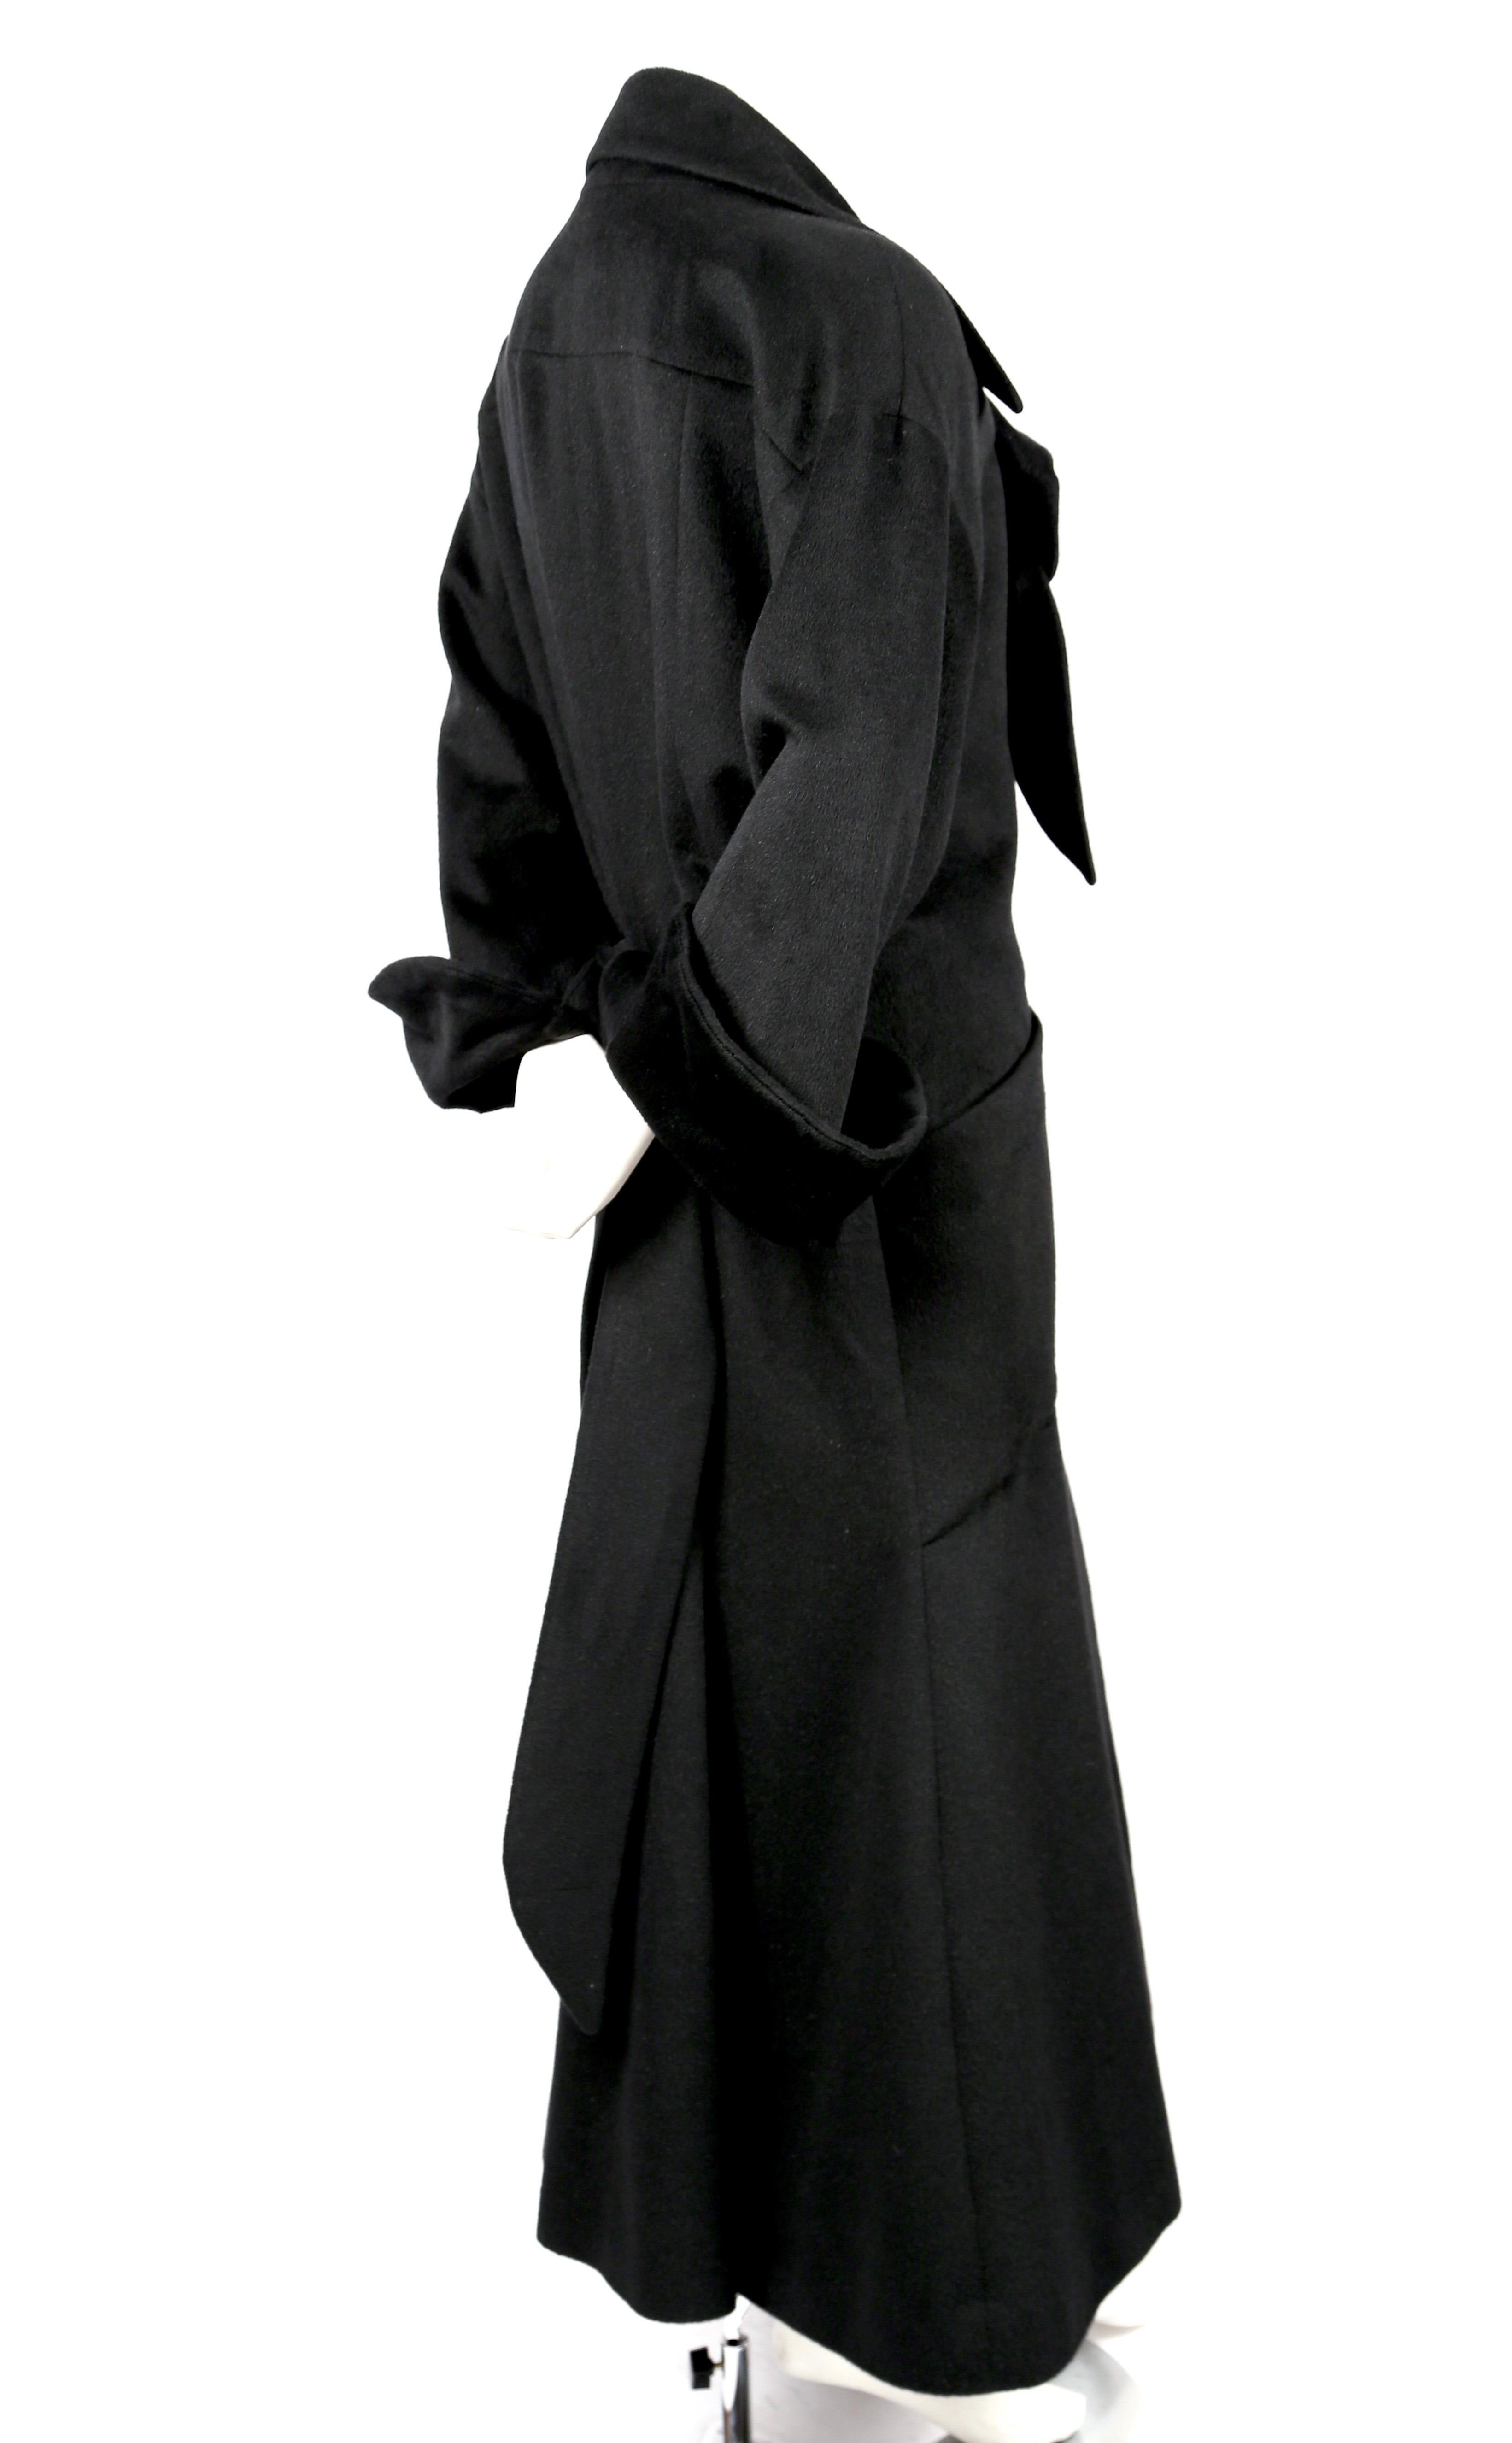 Black early 1990's KARL LAGERFELD black angora wool coat with neck-tie